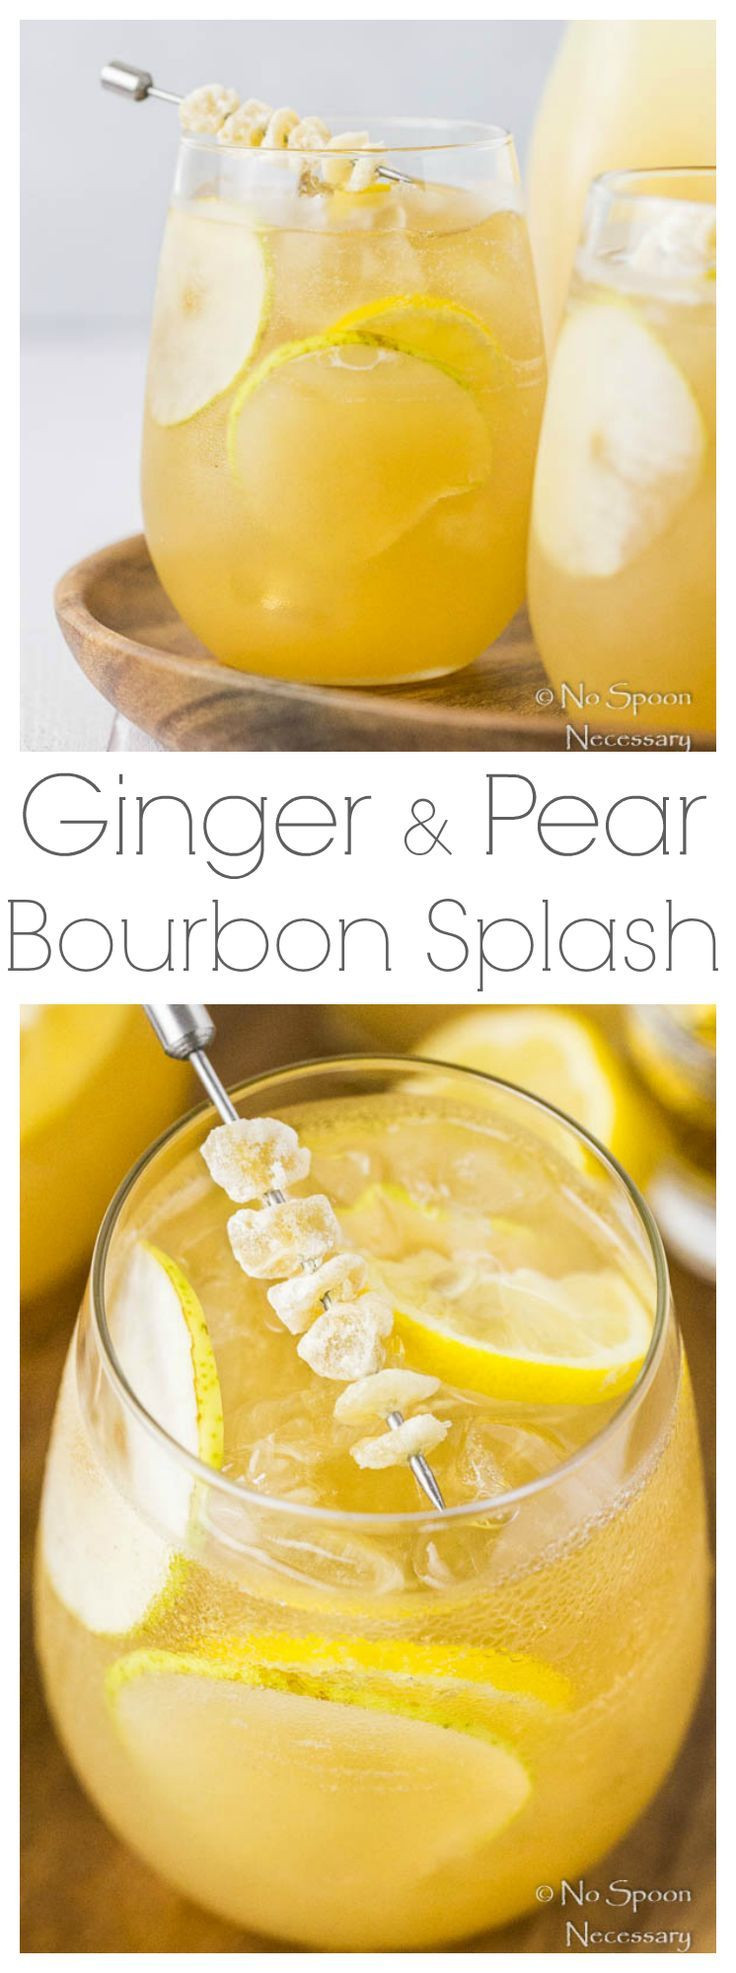 Fall Bourbon Drinks
 Ginger & Pear Bourbon Splash Cocktail The perfect